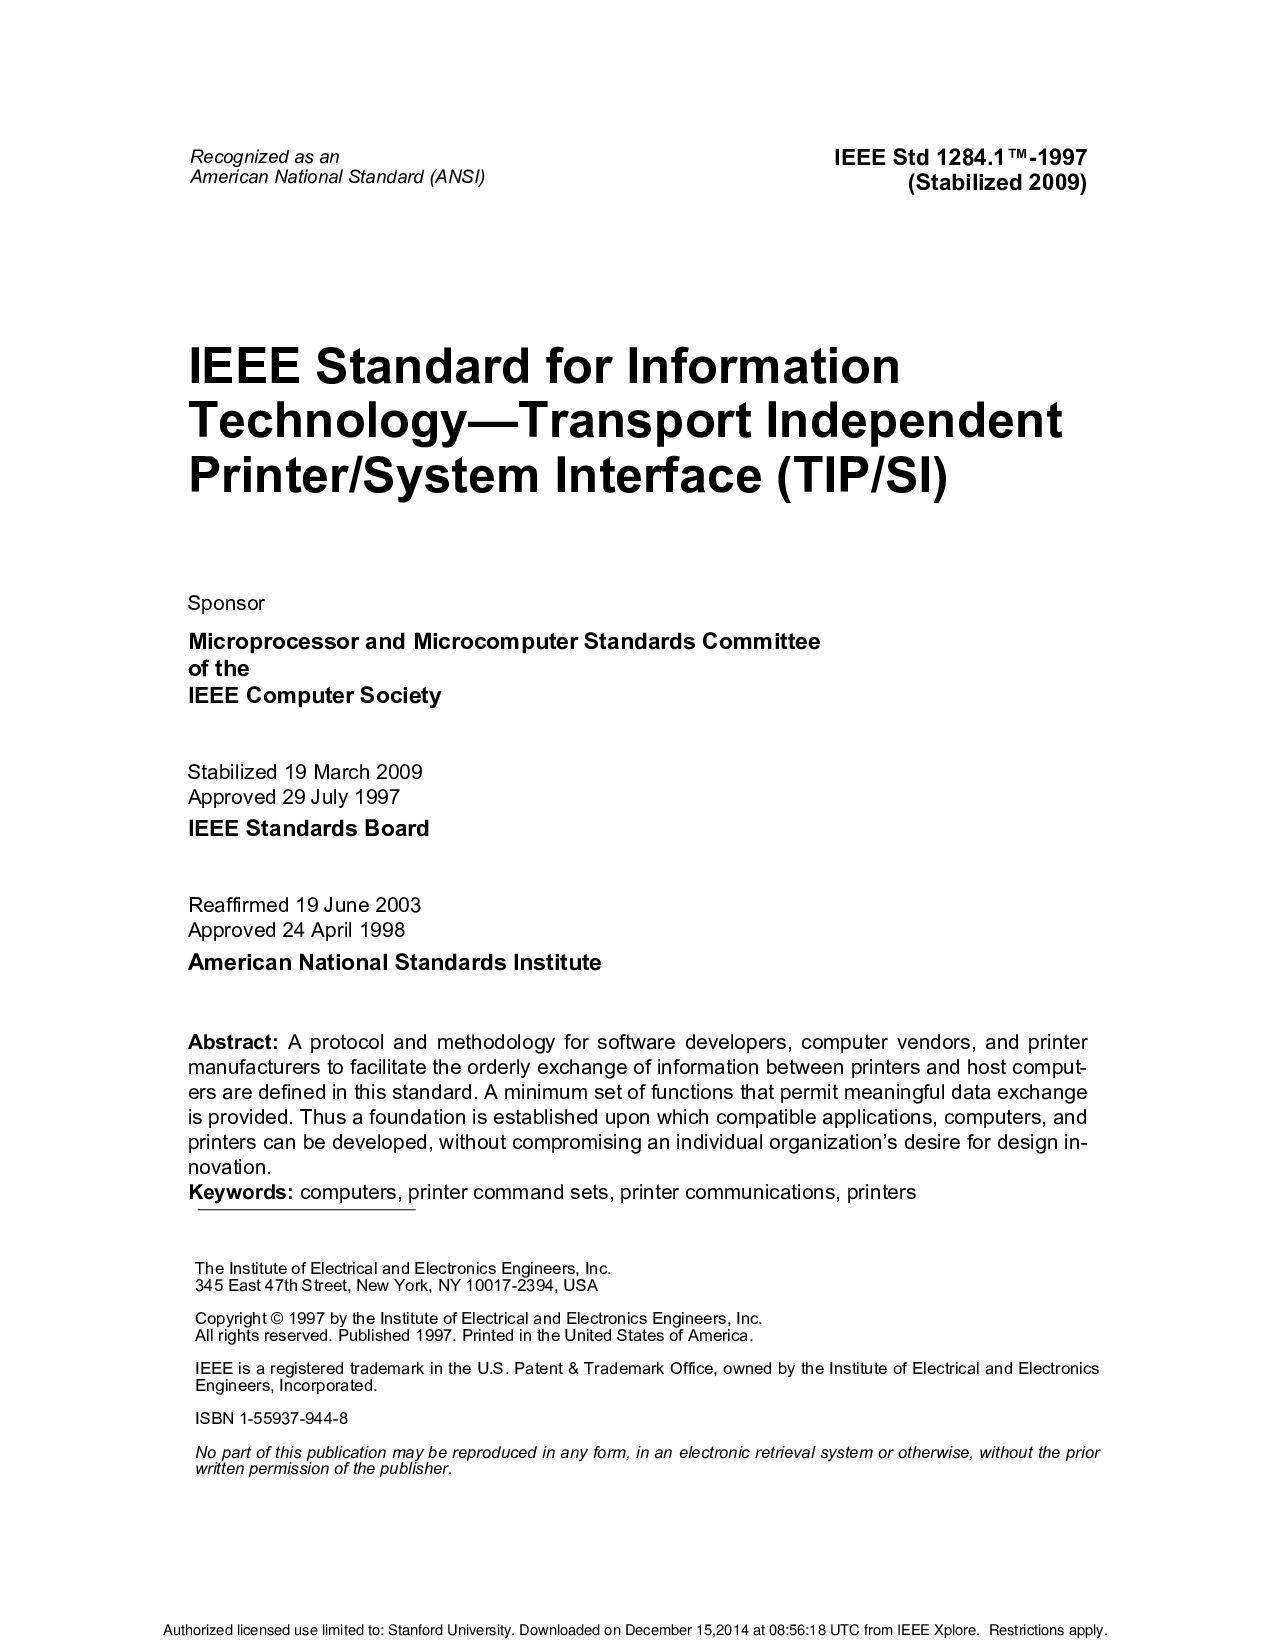 IEEE Std 1284.1-1997(R2009)